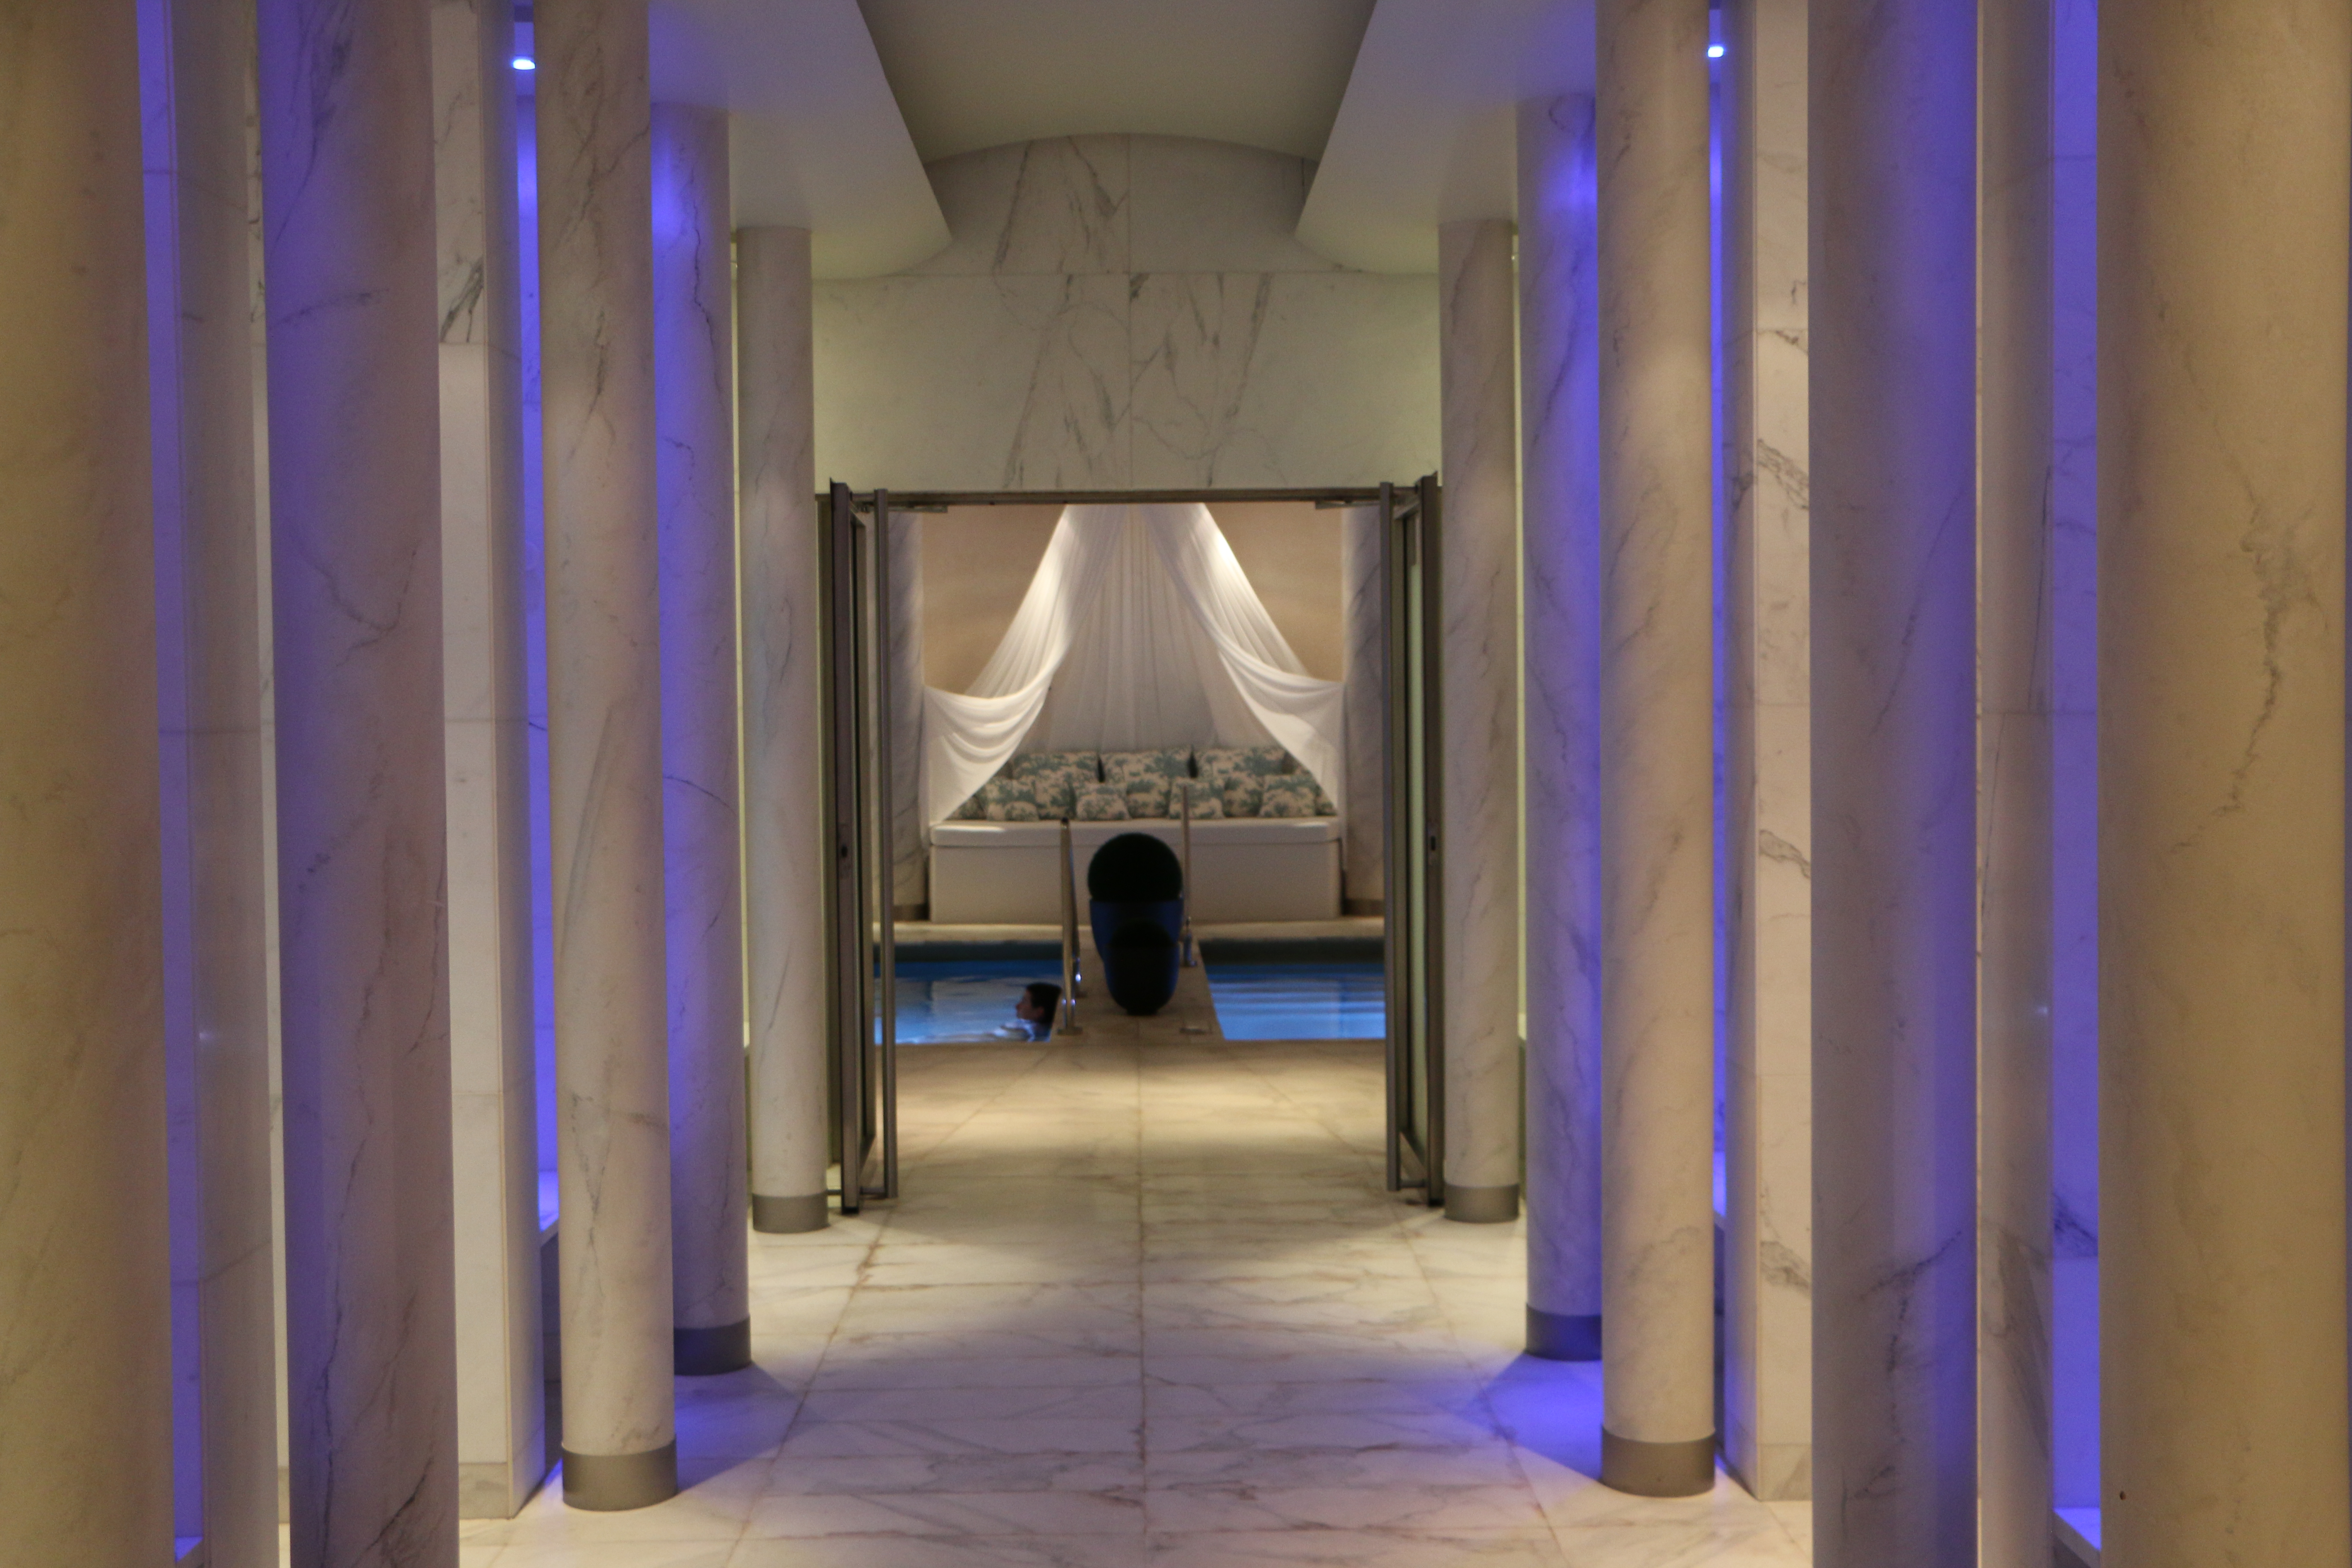 Aquamoon luxury spa At Place Vendôme